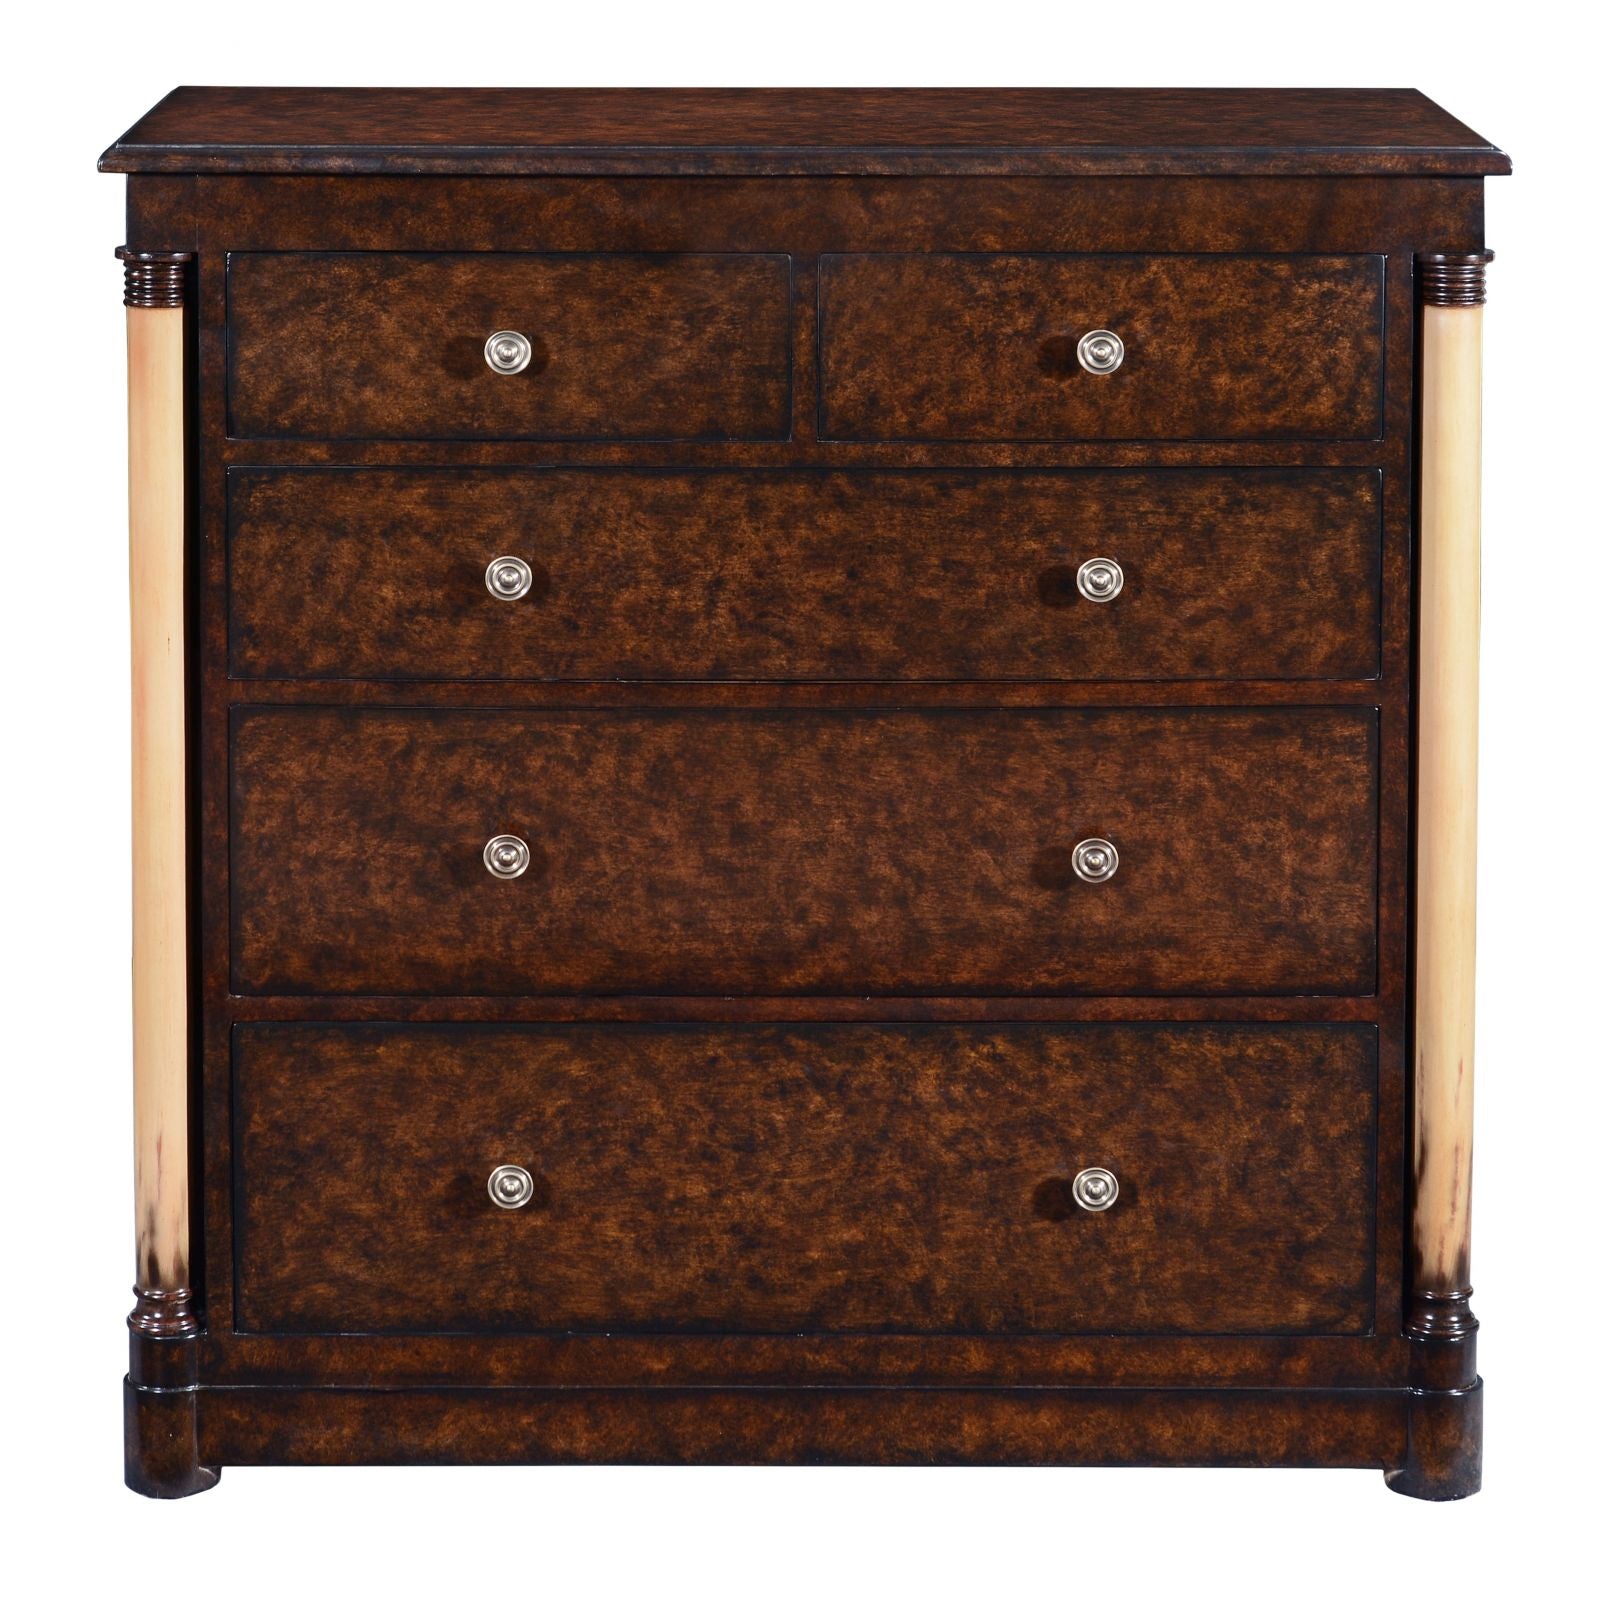 Empire chest of 5 drawers - dark burr oak painted